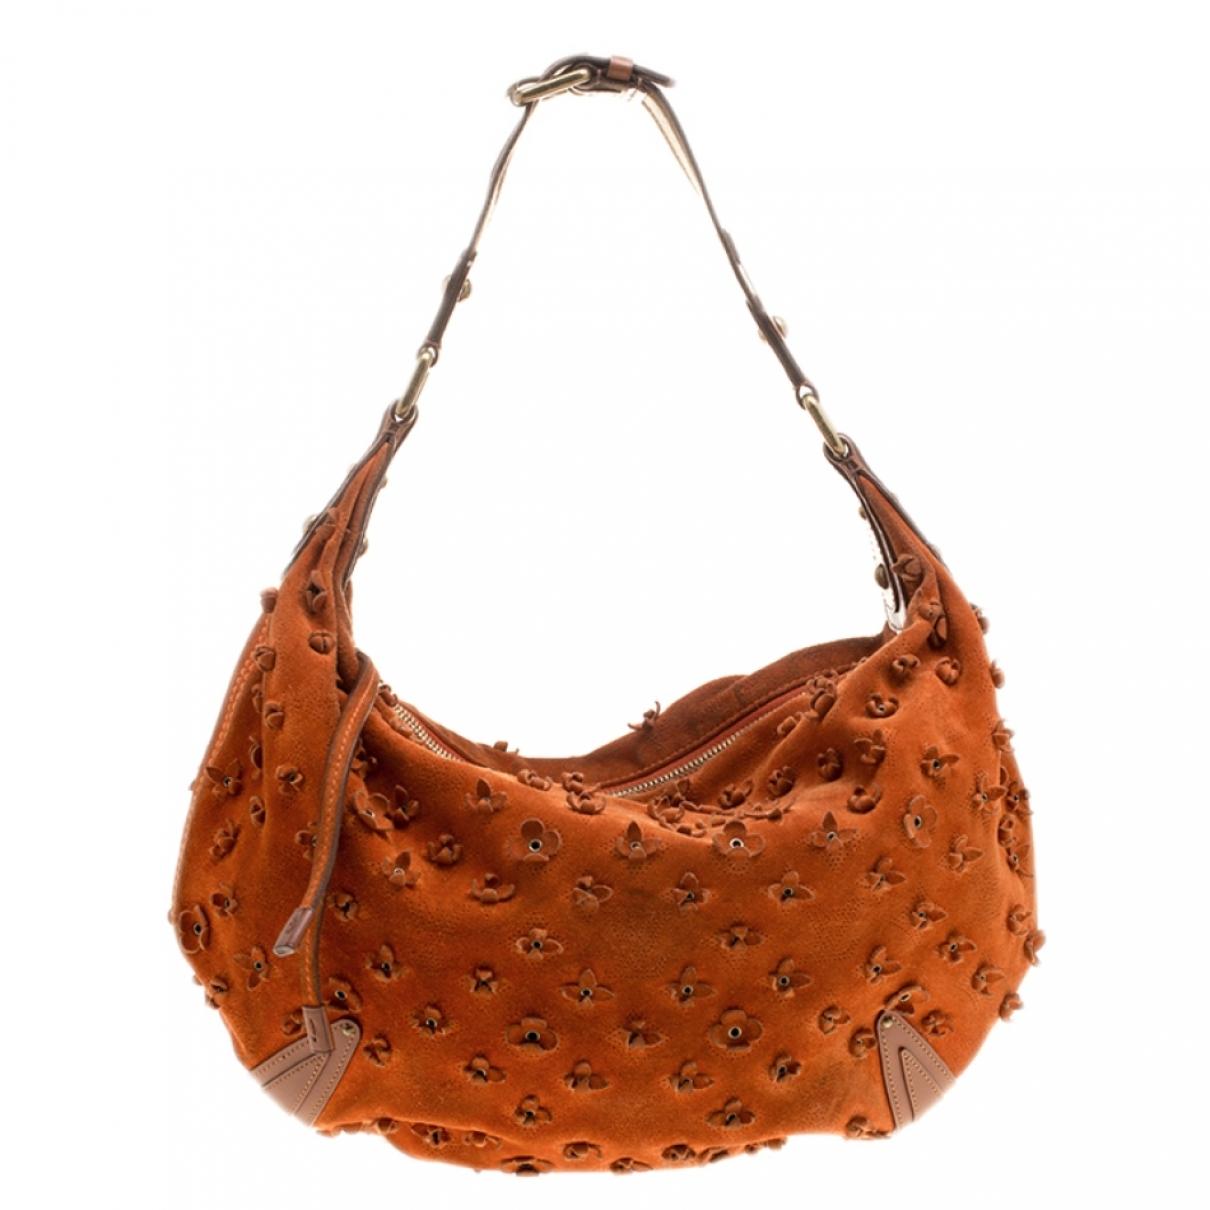 Lyst - Louis Vuitton Orange Leather Handbag in Orange